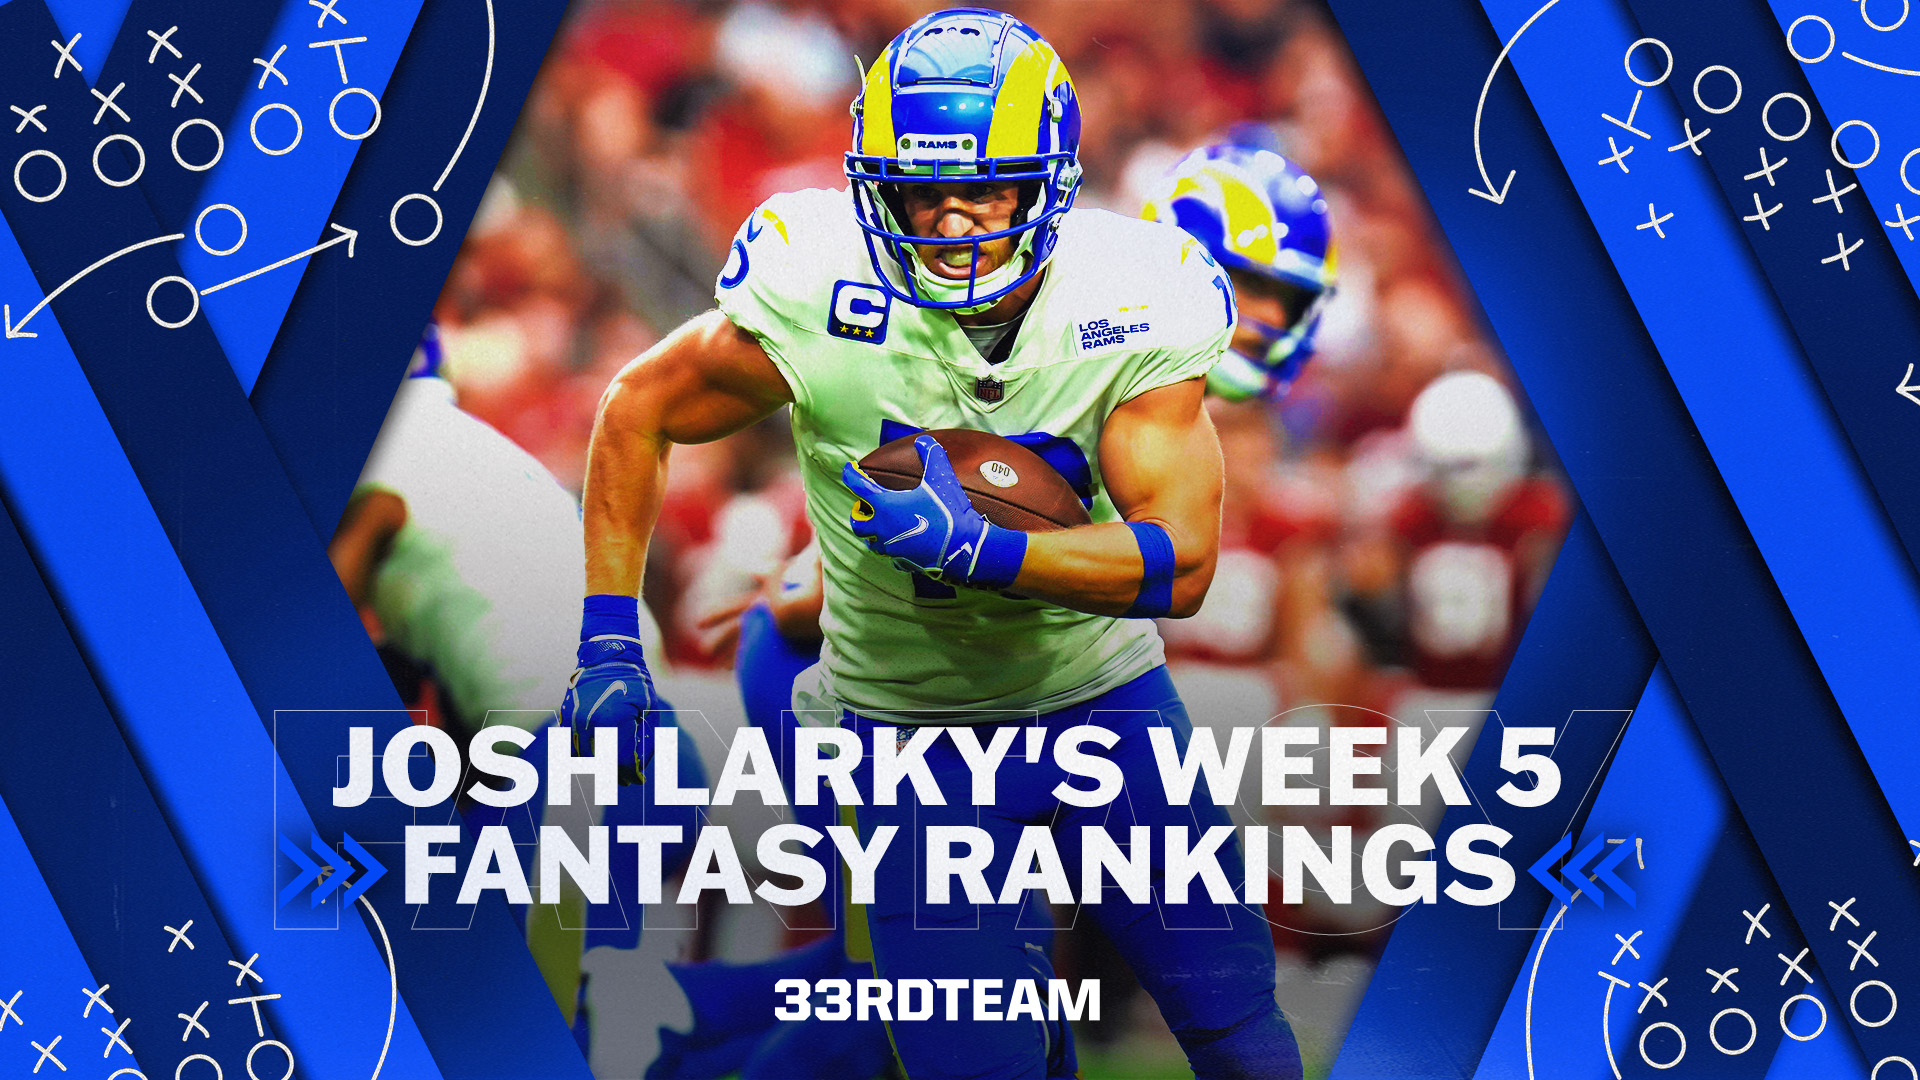 Josh Larky’s Week 5 NFL Fantasy Football Rankings